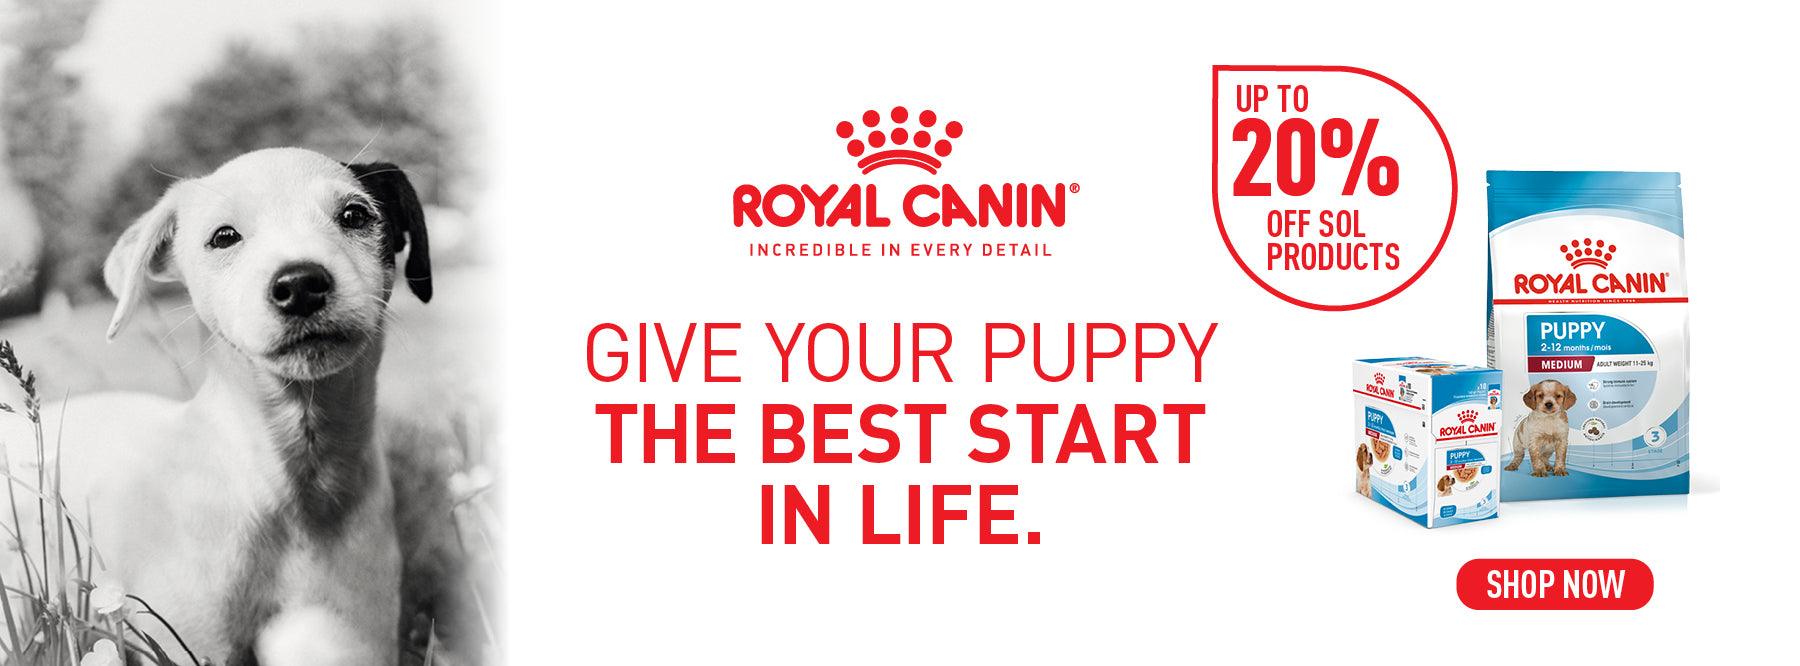 Royal Canin Puppy April Sale